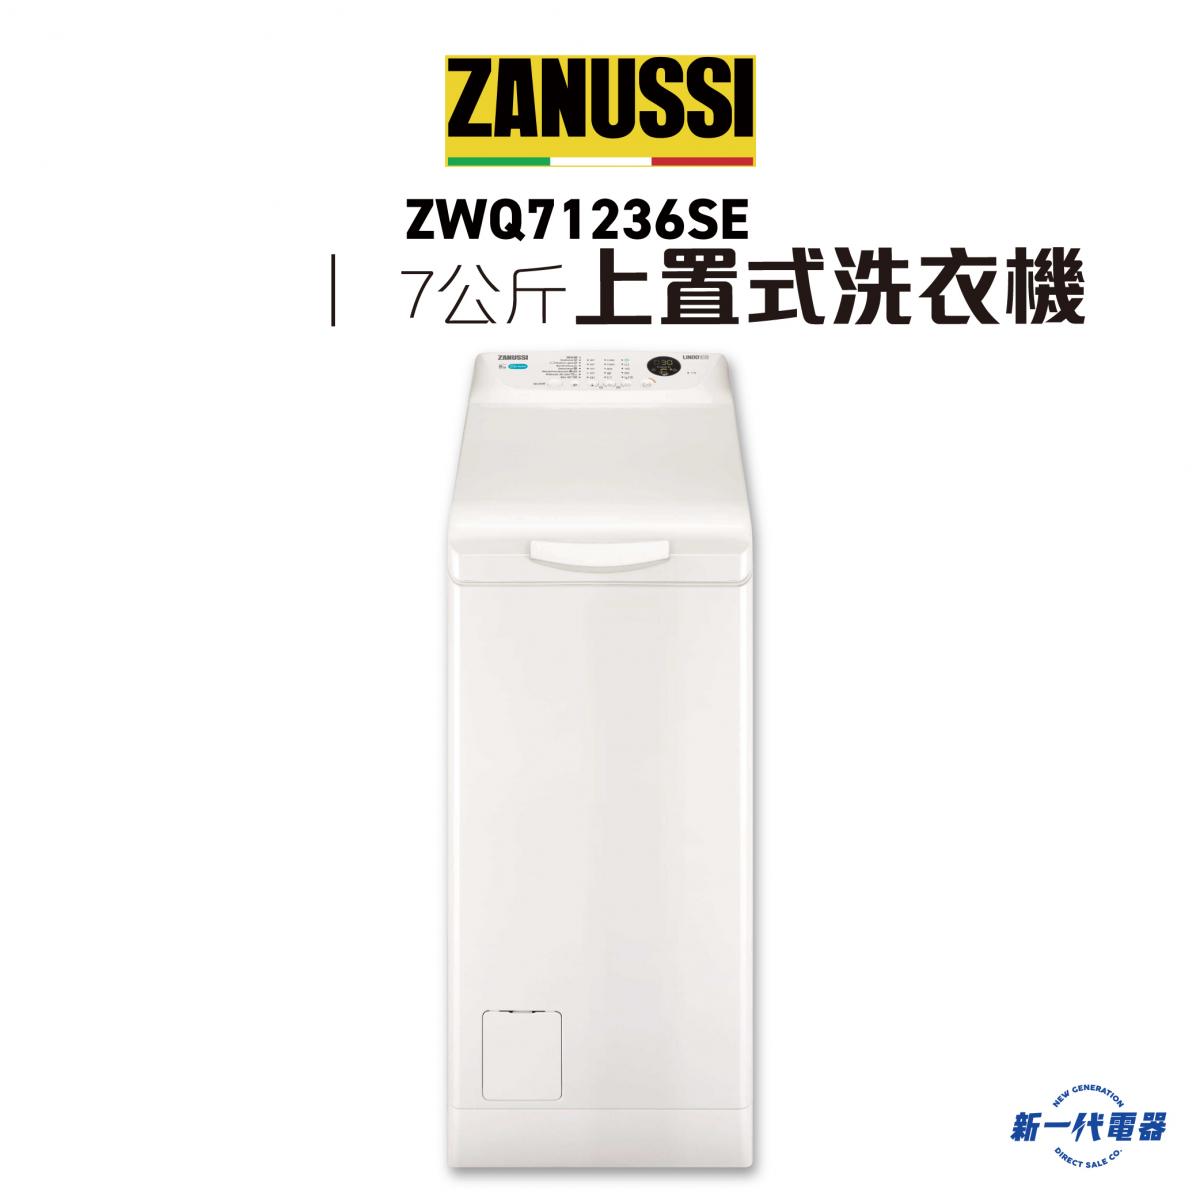 ZWQ71236SE -7KG 1200轉 頂揭式洗衣機 (ZWQ-71236SE)